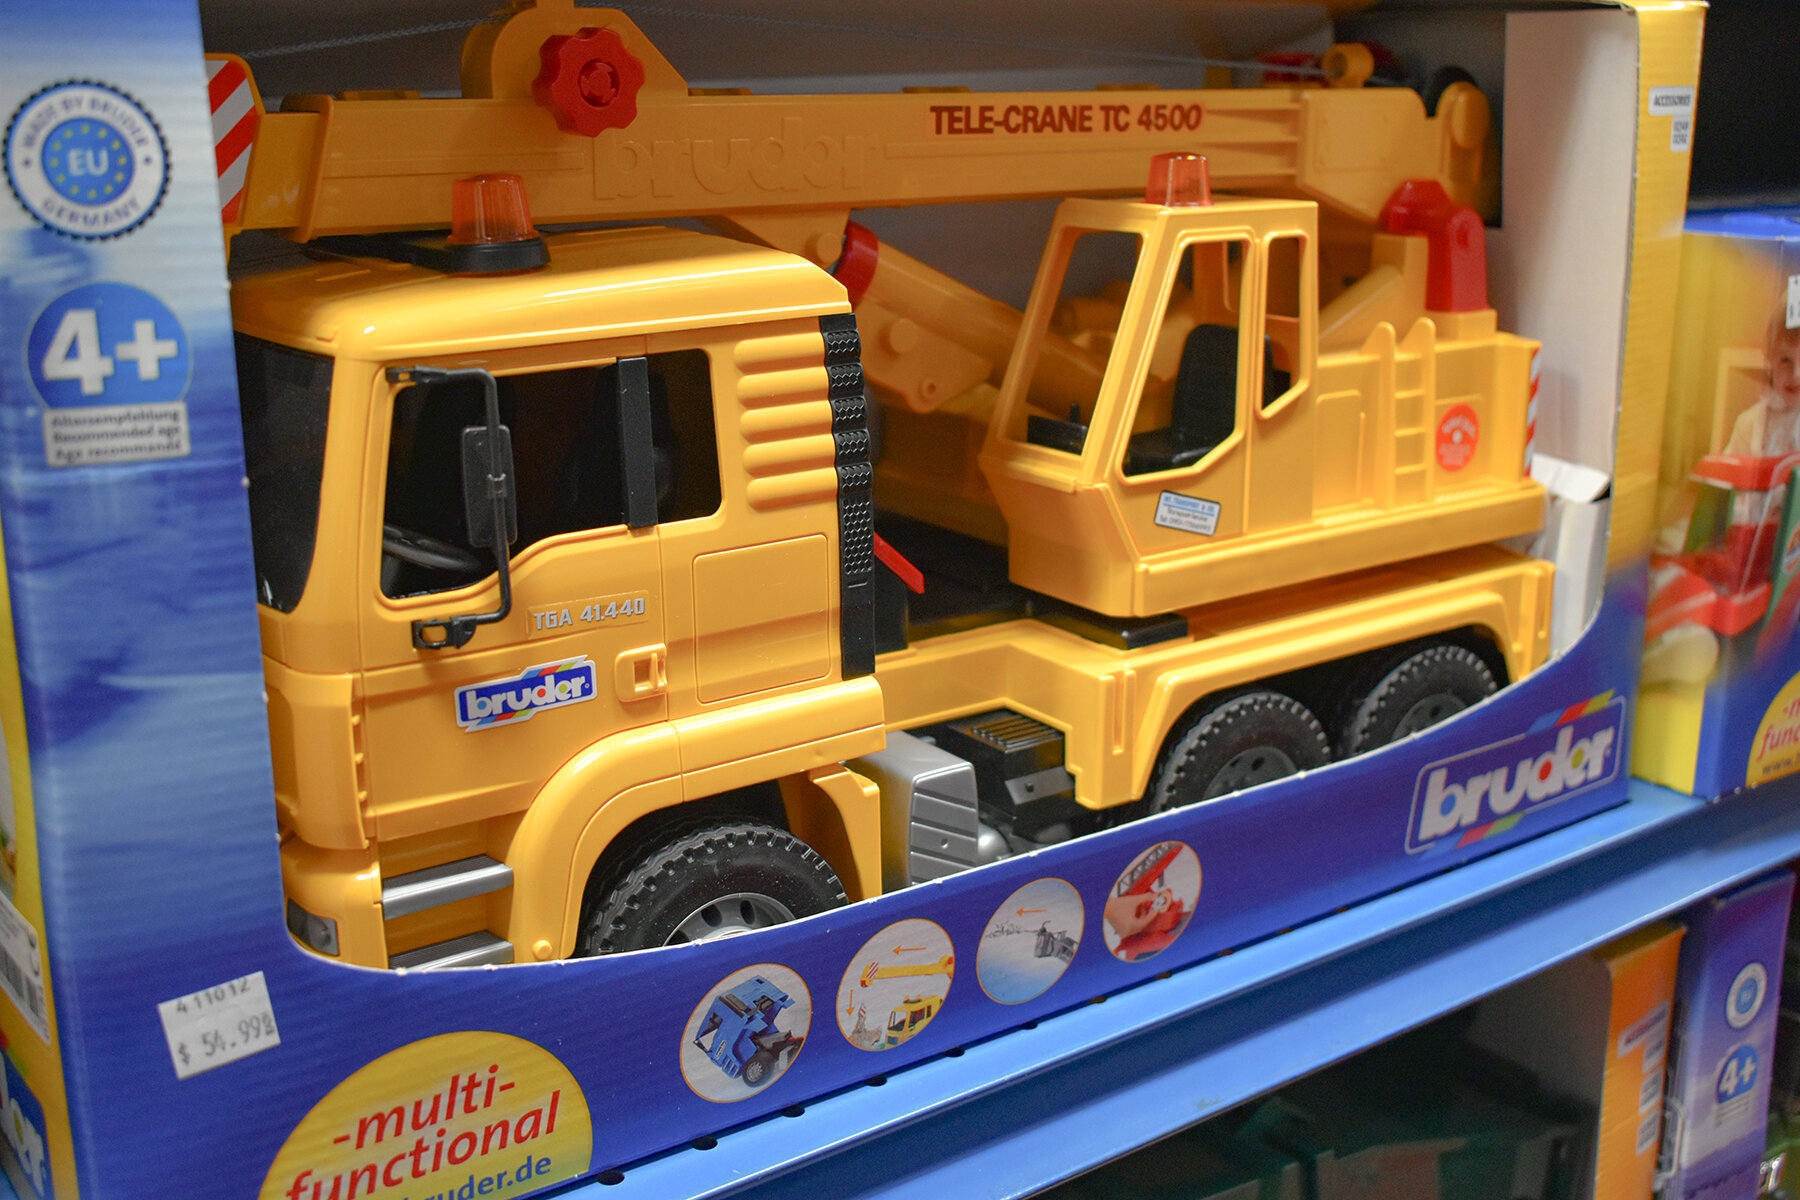 Phillips Toy Mart Bruder Tele-Crane truck.JPG